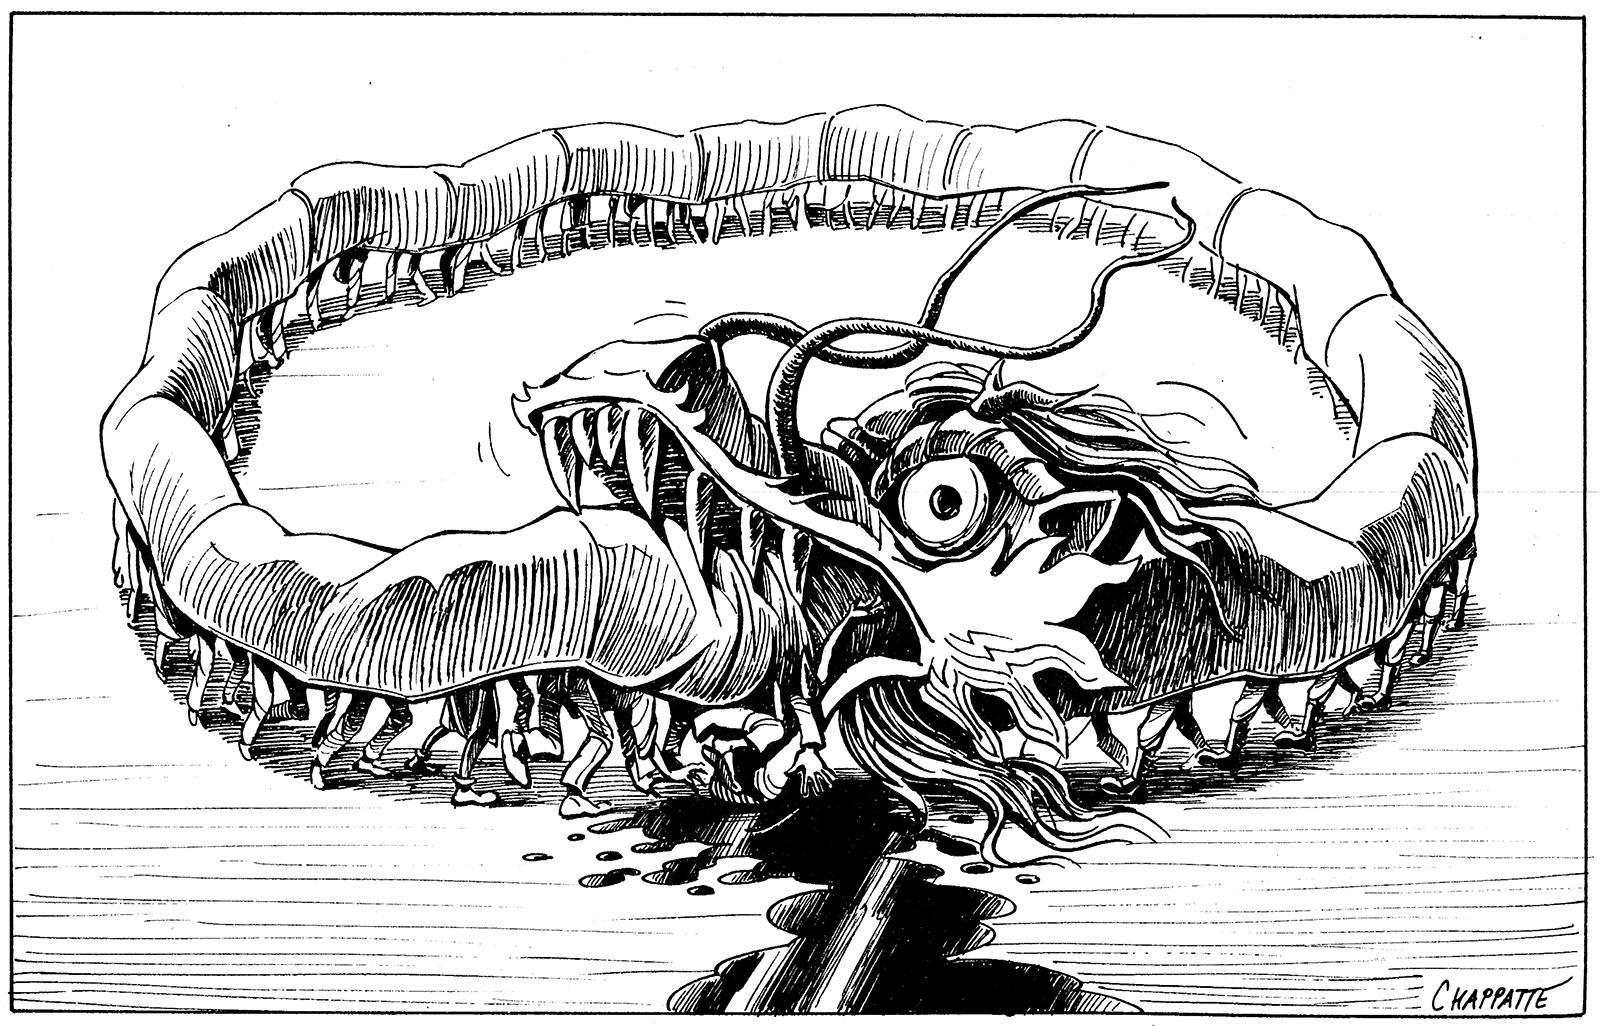 Tiananmen (Cartoon published June 6, 1989)